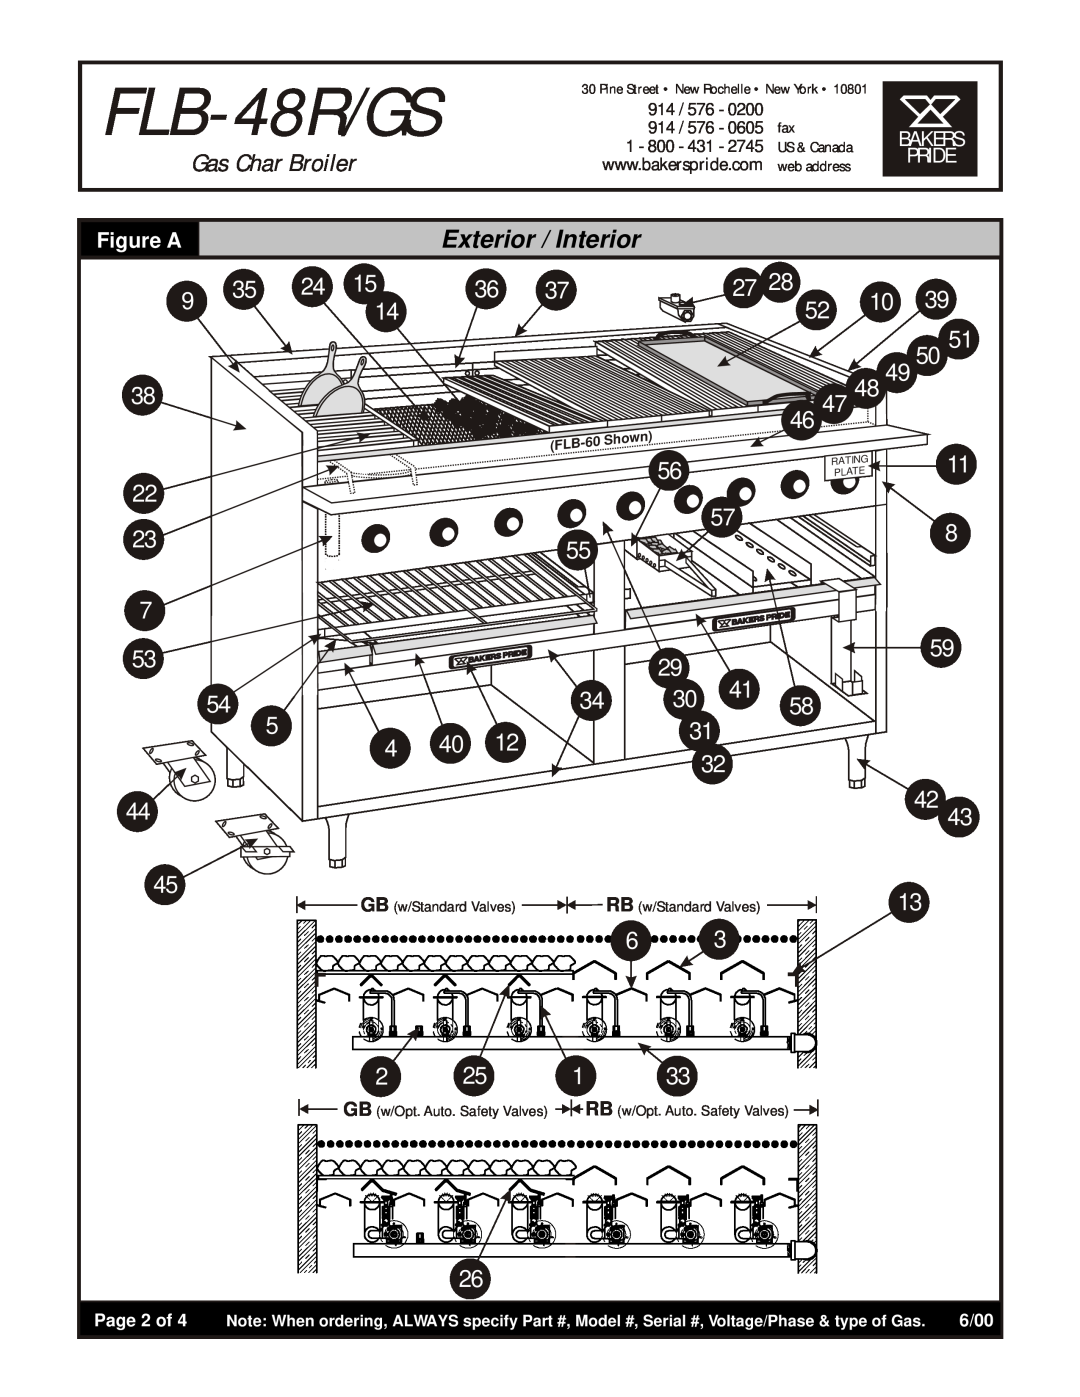 Bakers Pride Oven FLB-48R/GS manual Figure A, Exterior / Interior 